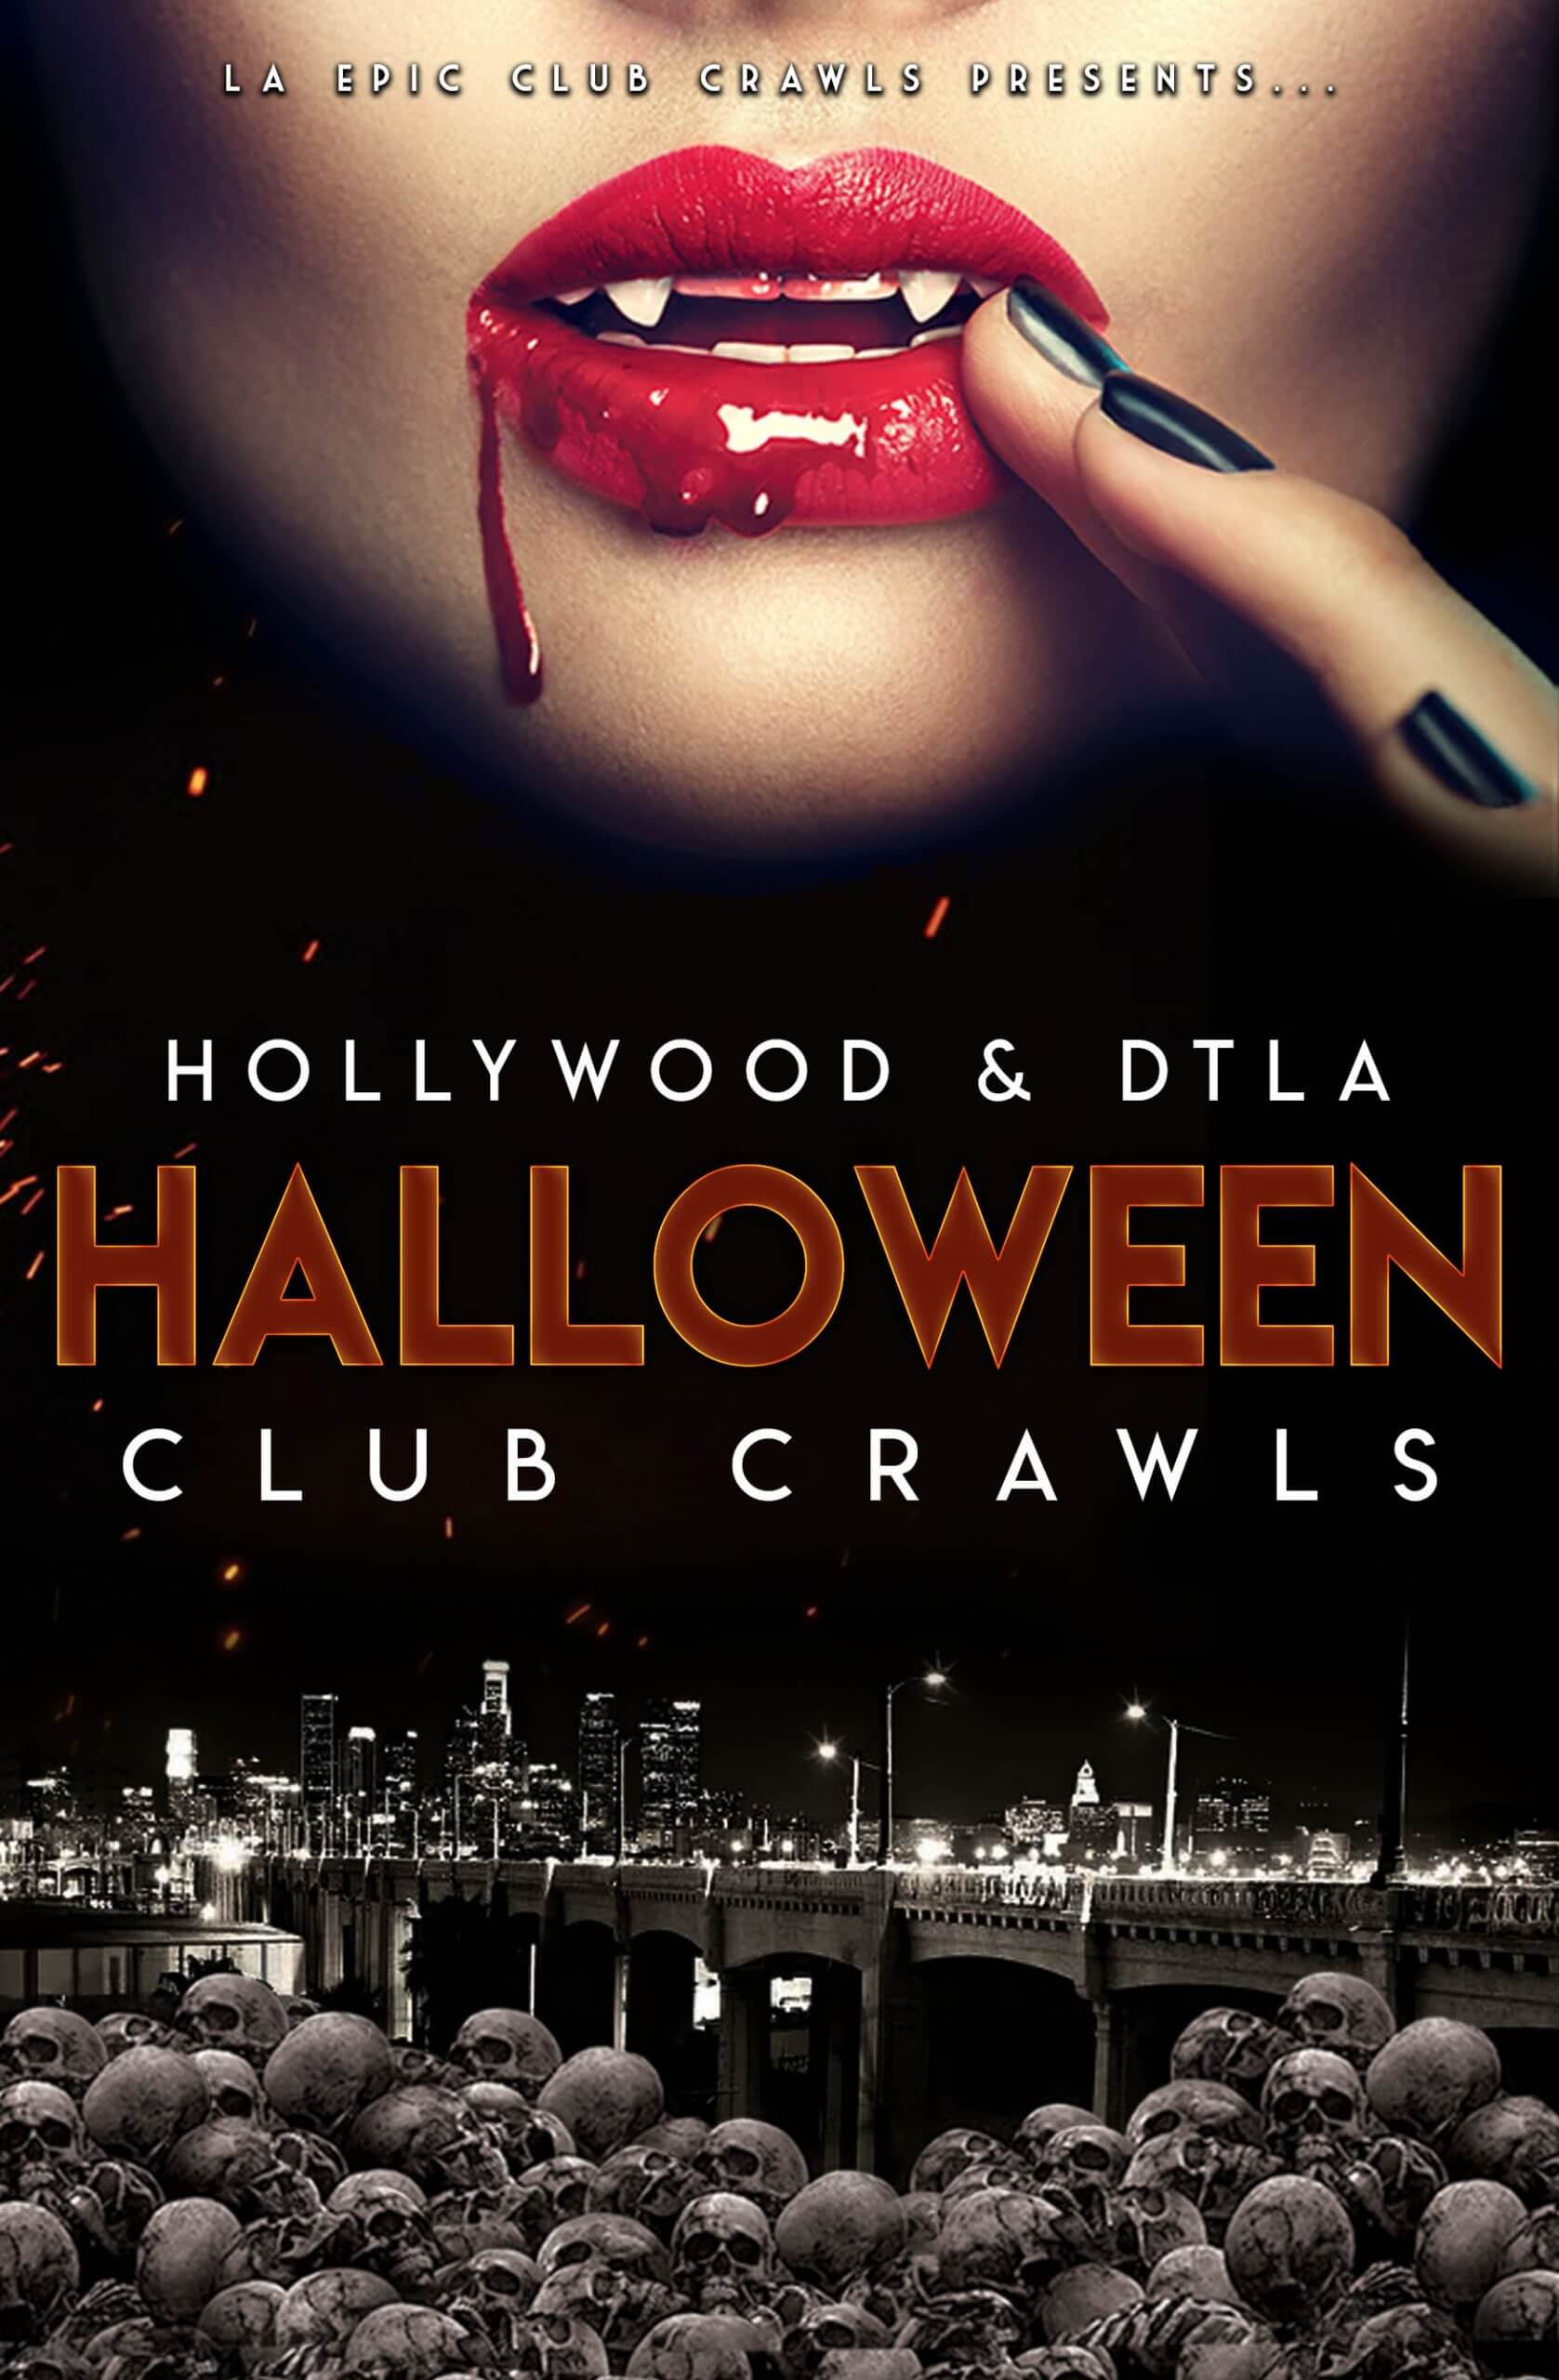 Los Angeles Holidays & Special Events I LA Epic Club Crawls